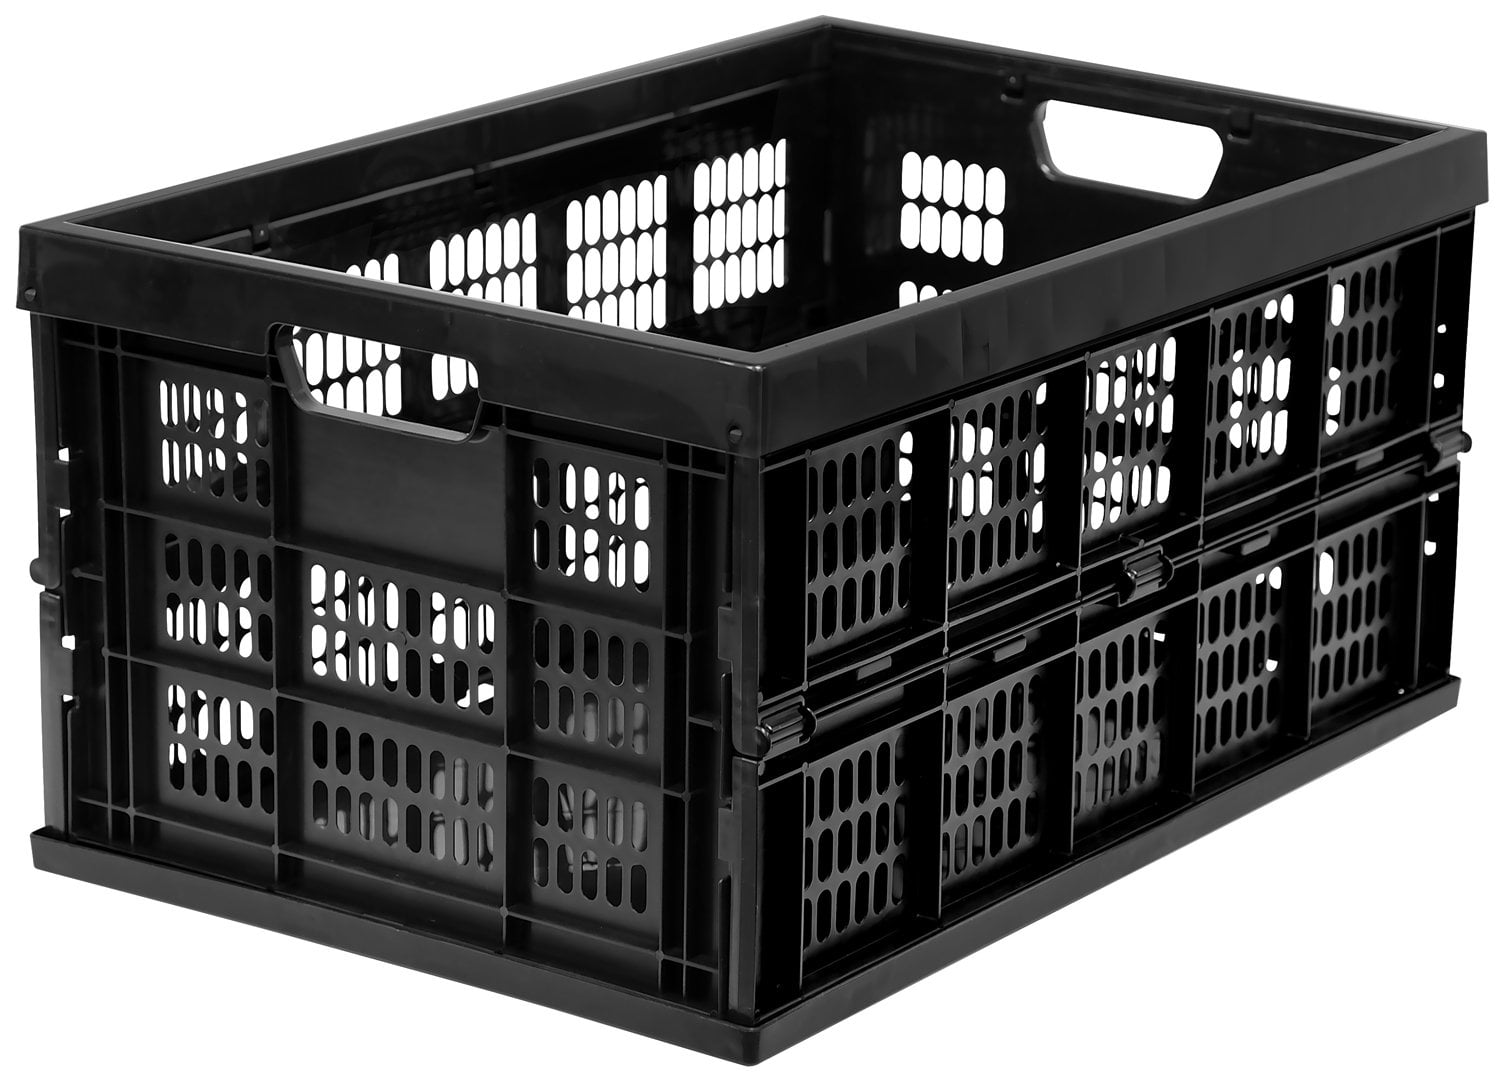 Folding Crates Storage 4 Packs Sandmovie 16 L Plastic Collapsible Crate